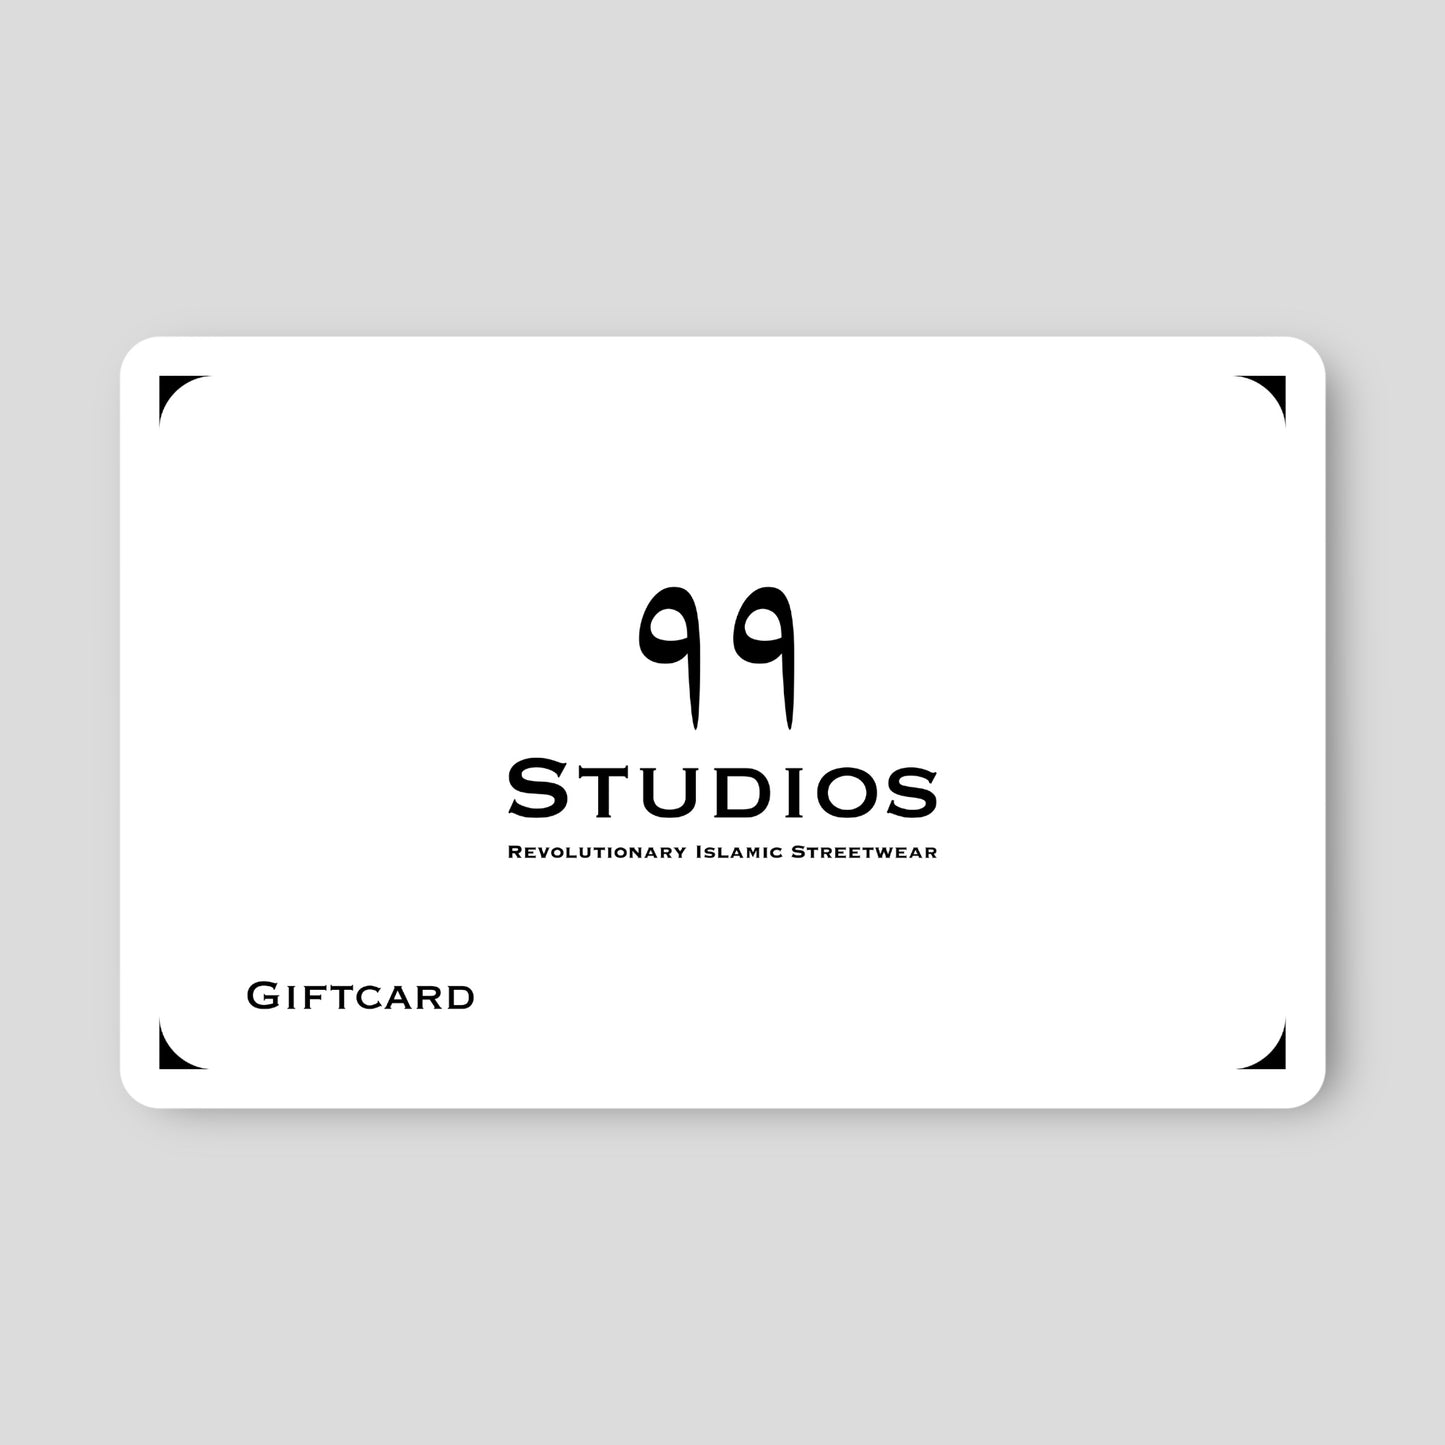 99 STUDIOS GIFTCARD